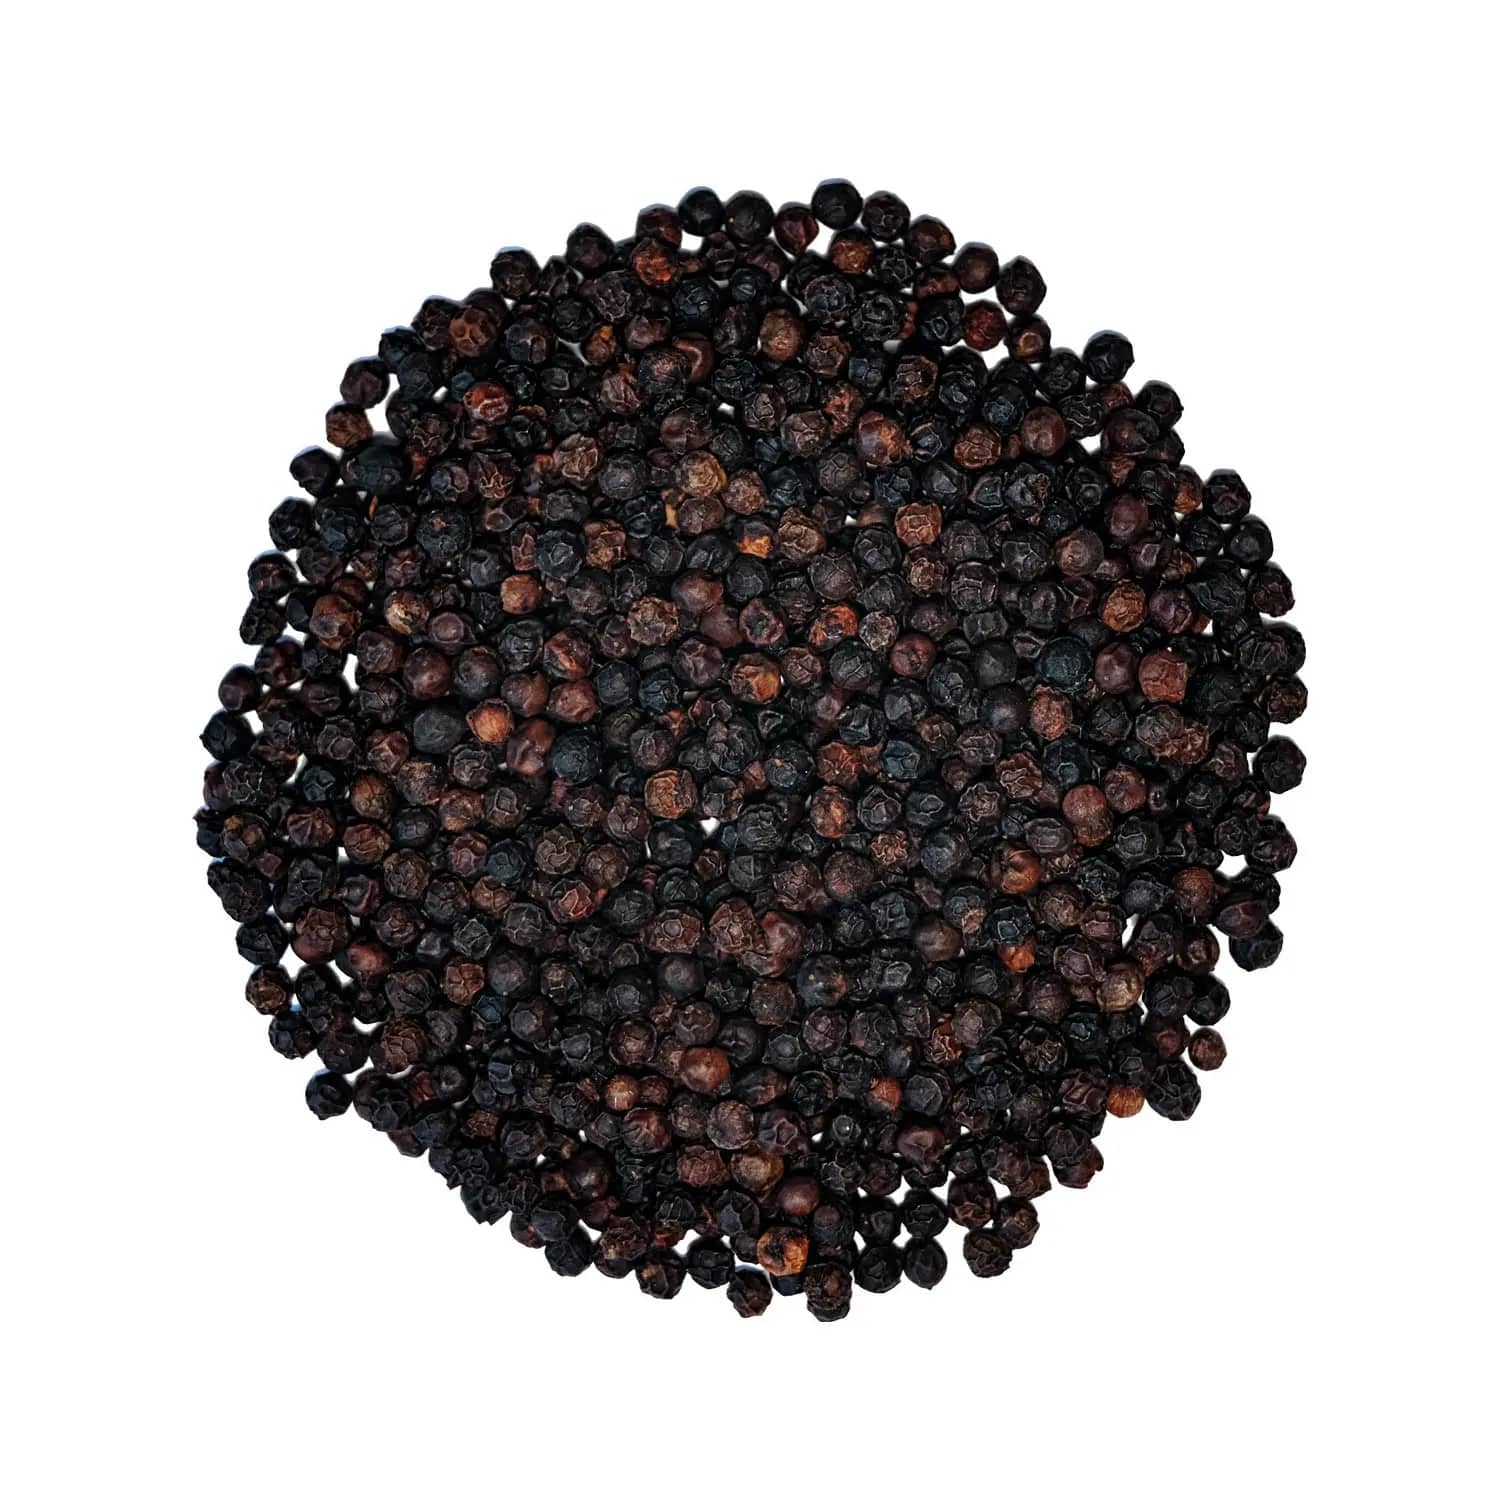 Dried black pepper from Kerala